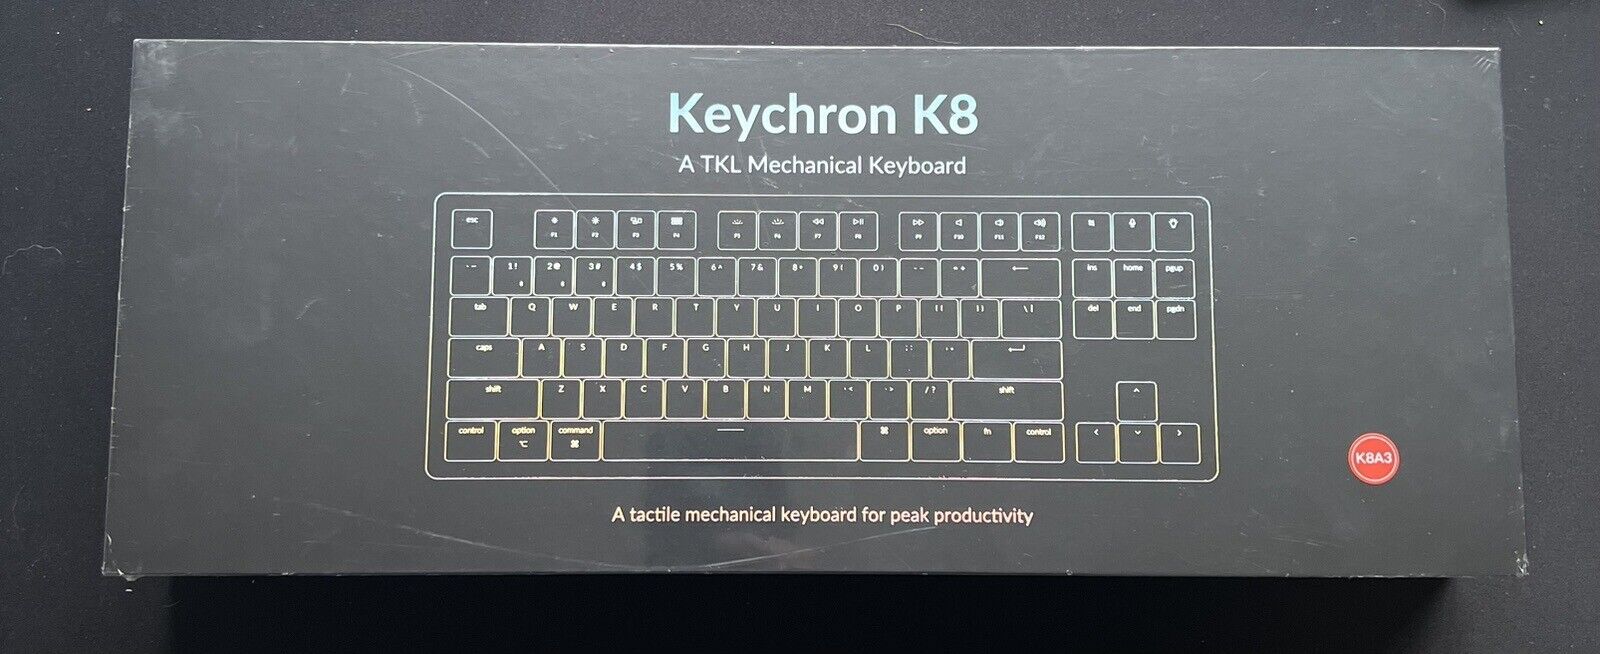 Keychron K8 Mechanical Keyboard